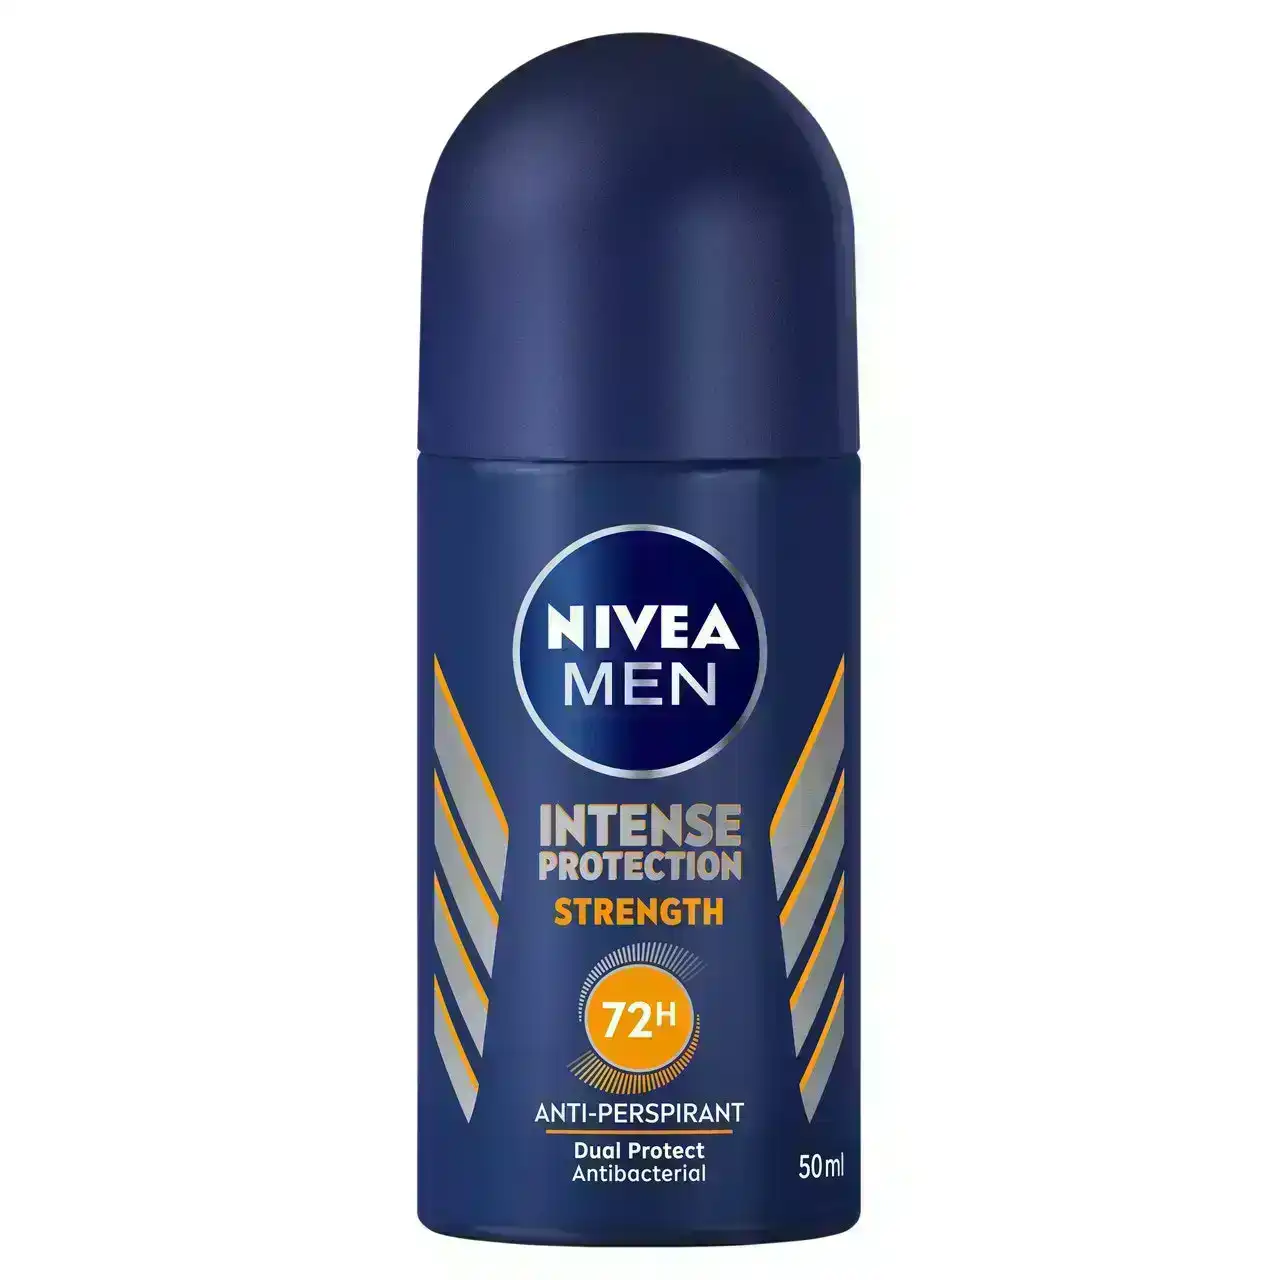 Nivea MEN Intense Protection Strength Anti-perspirant Roll-On Deodorant 50ml